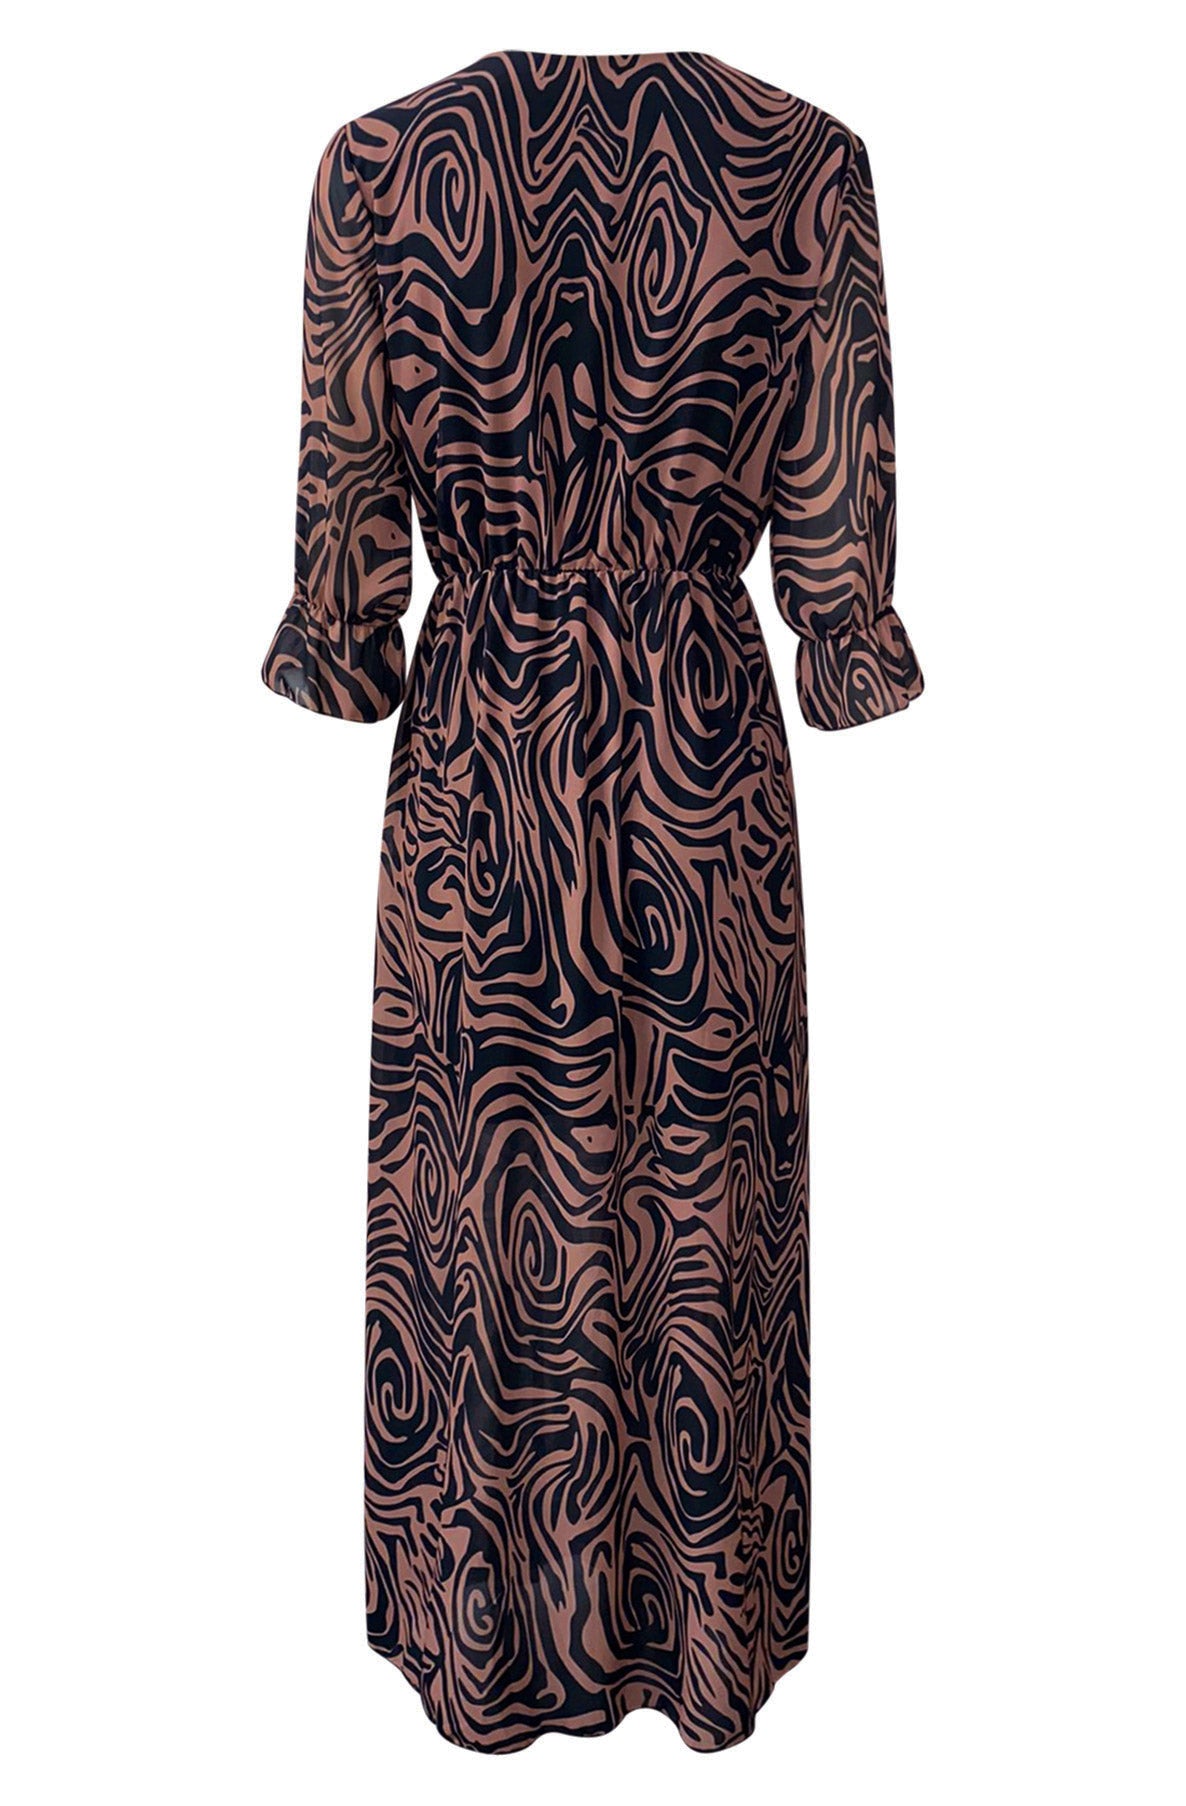 Anya Chiffon Wrap Maxi Dress - Catwalk Wholesale - wholesale clothing